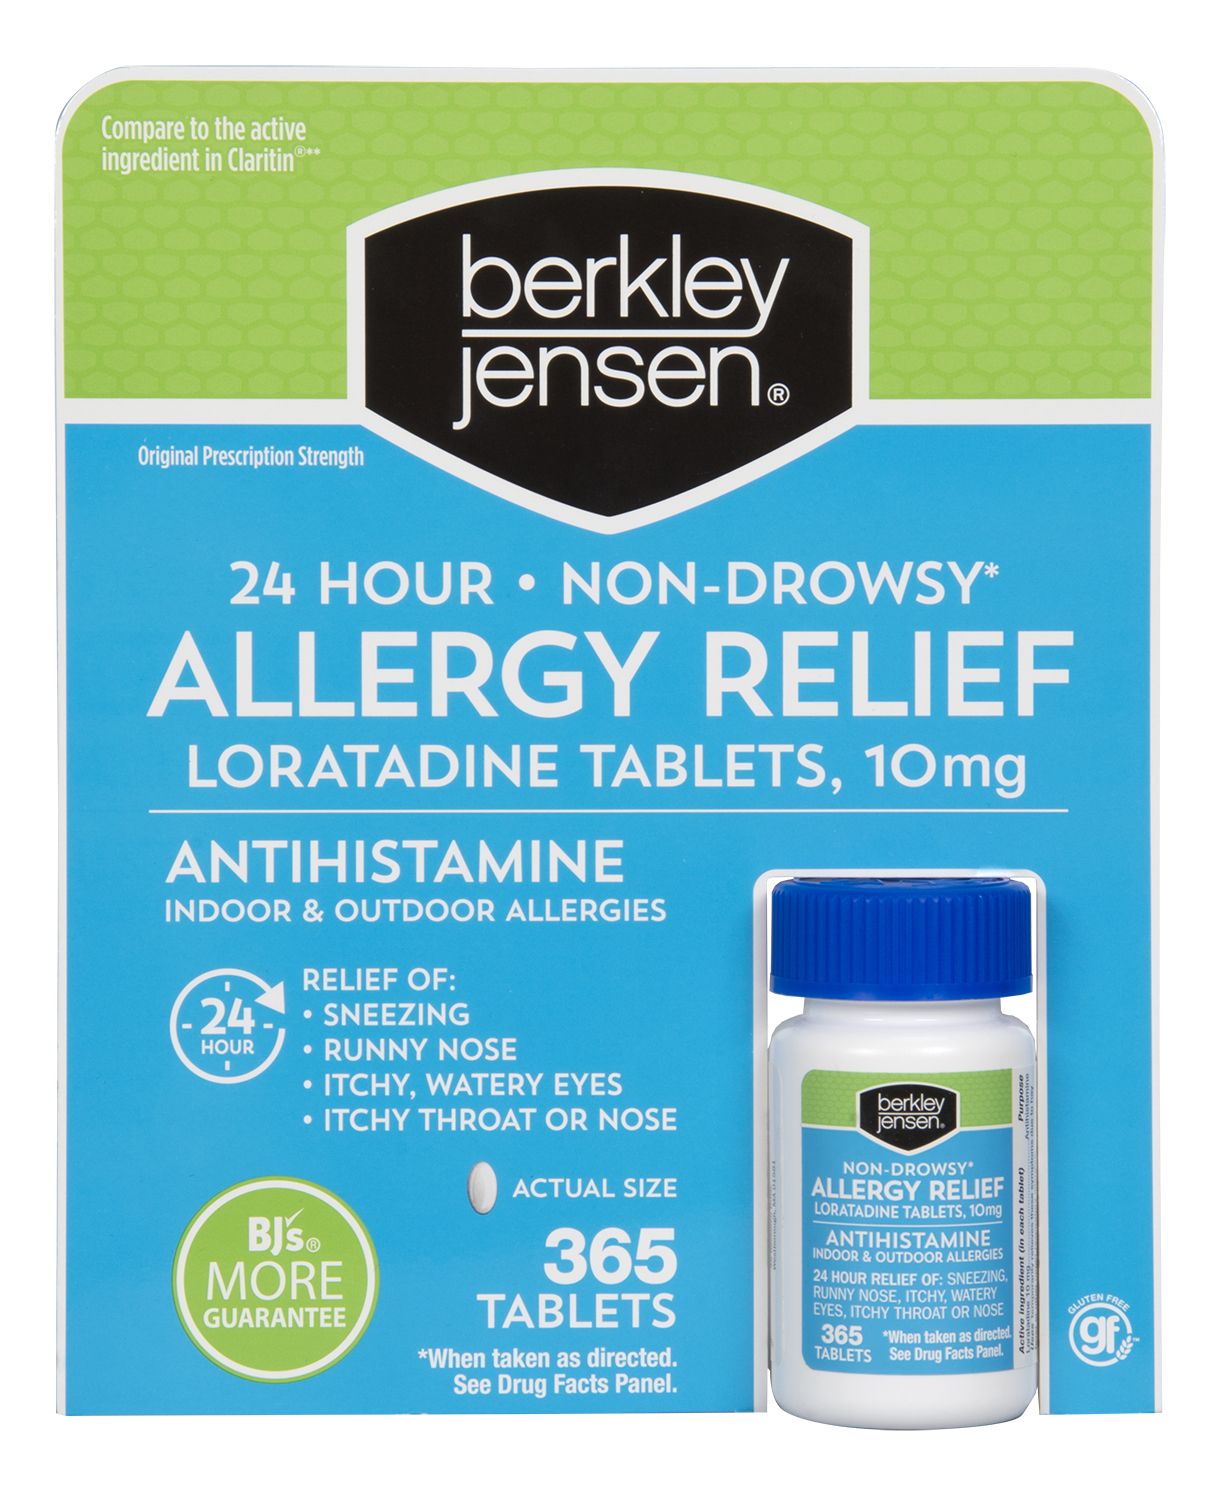 Berkley Jensen Allergy Relief Loratadine 10mg Tablets, 365 ct.